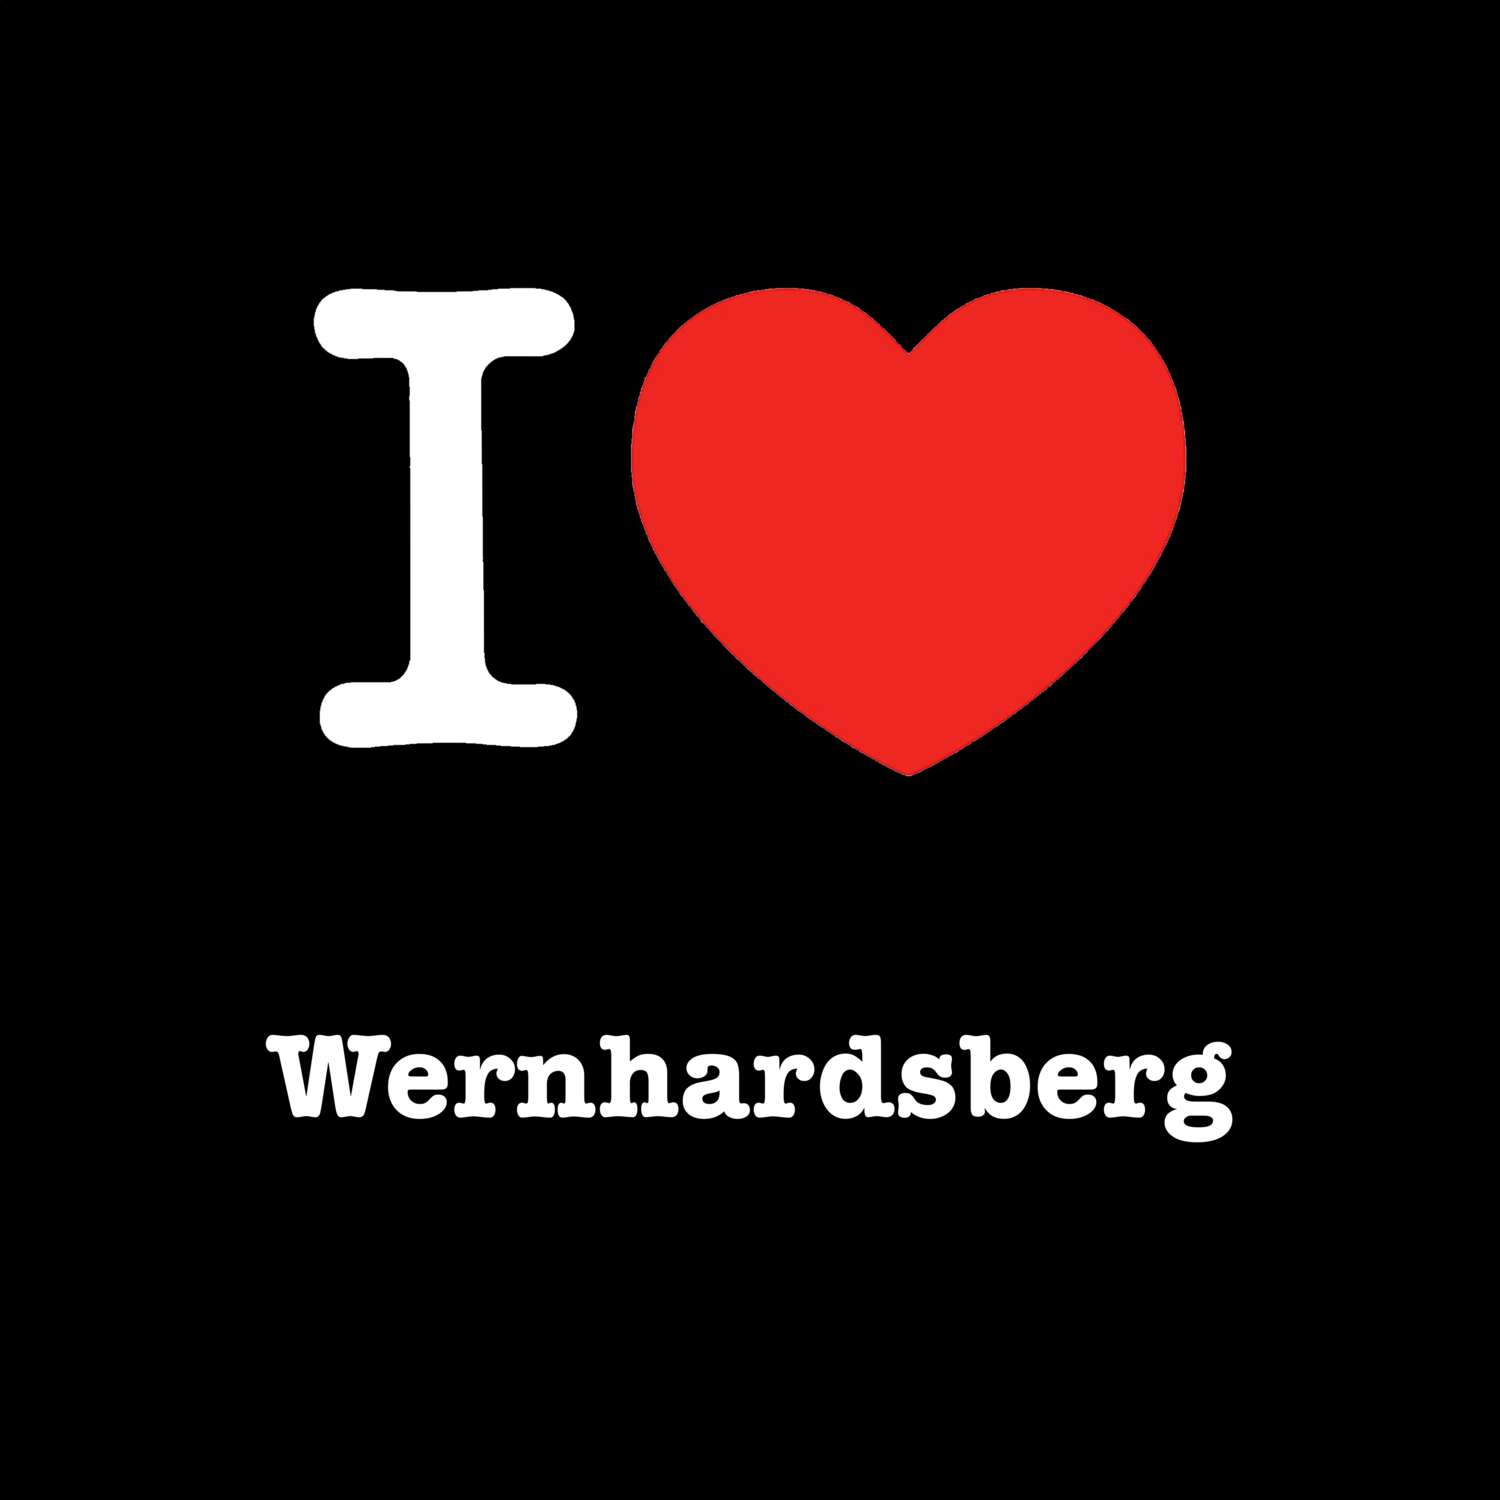 Wernhardsberg T-Shirt »I love«